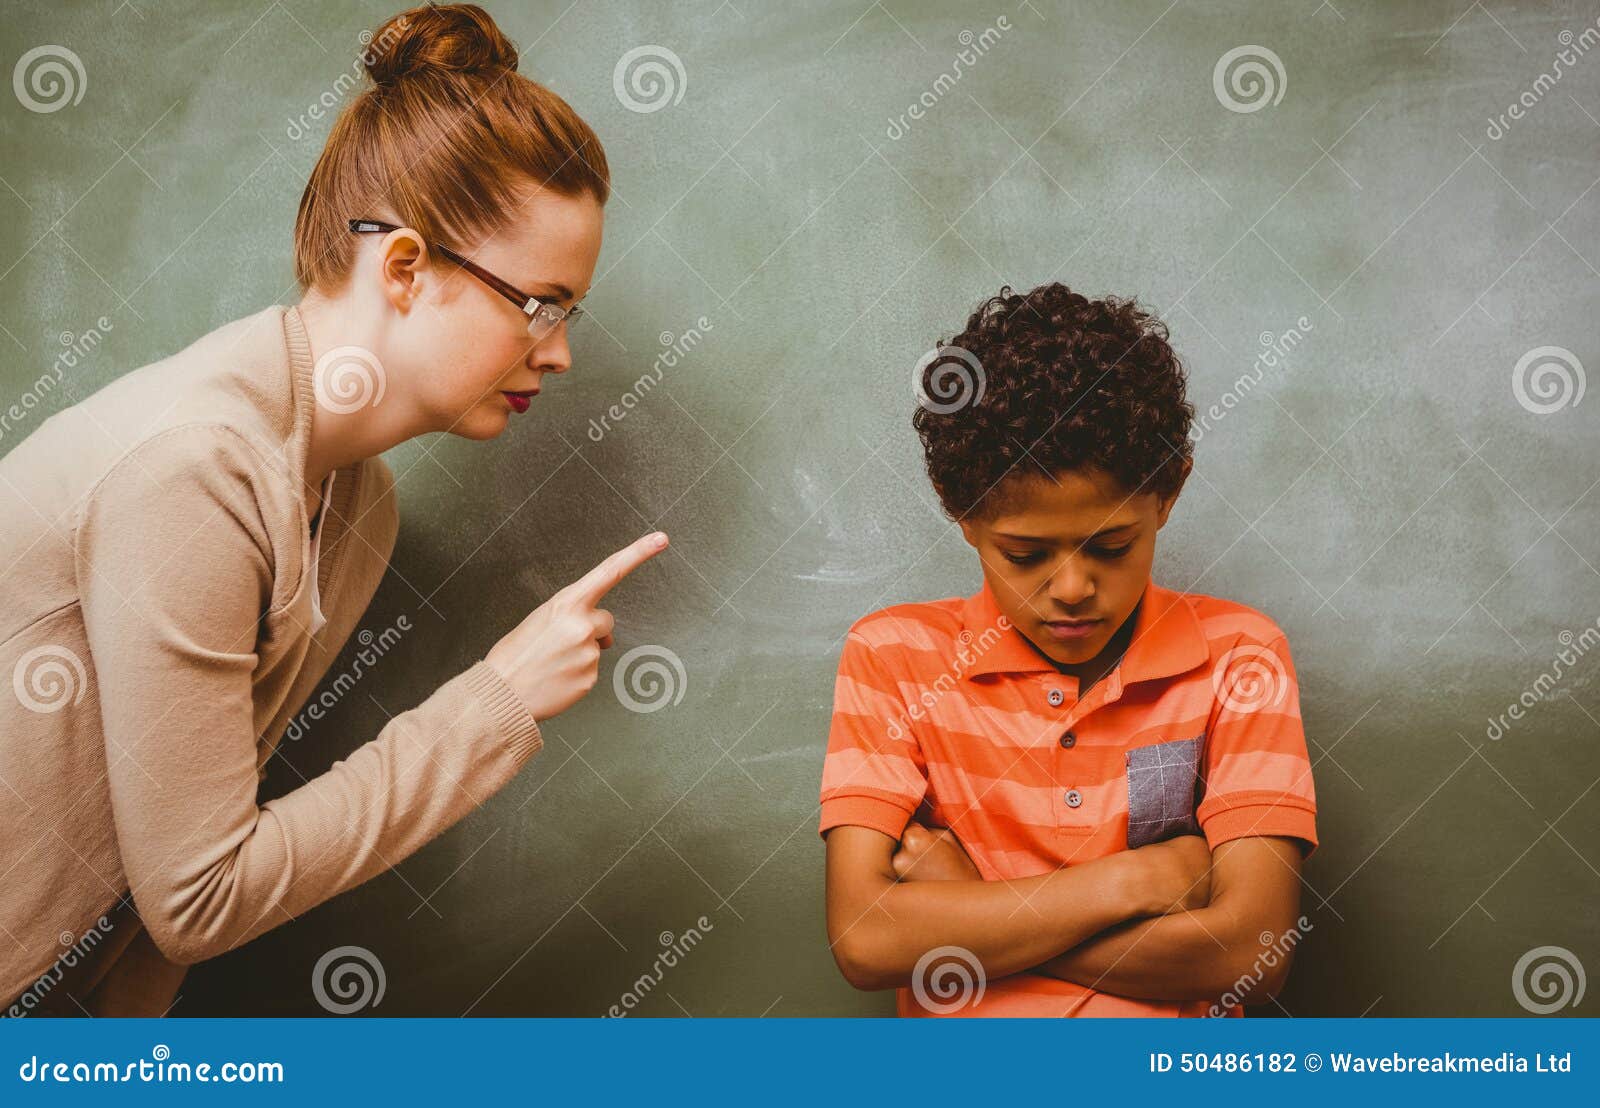 teacher shouting at boy in classroom